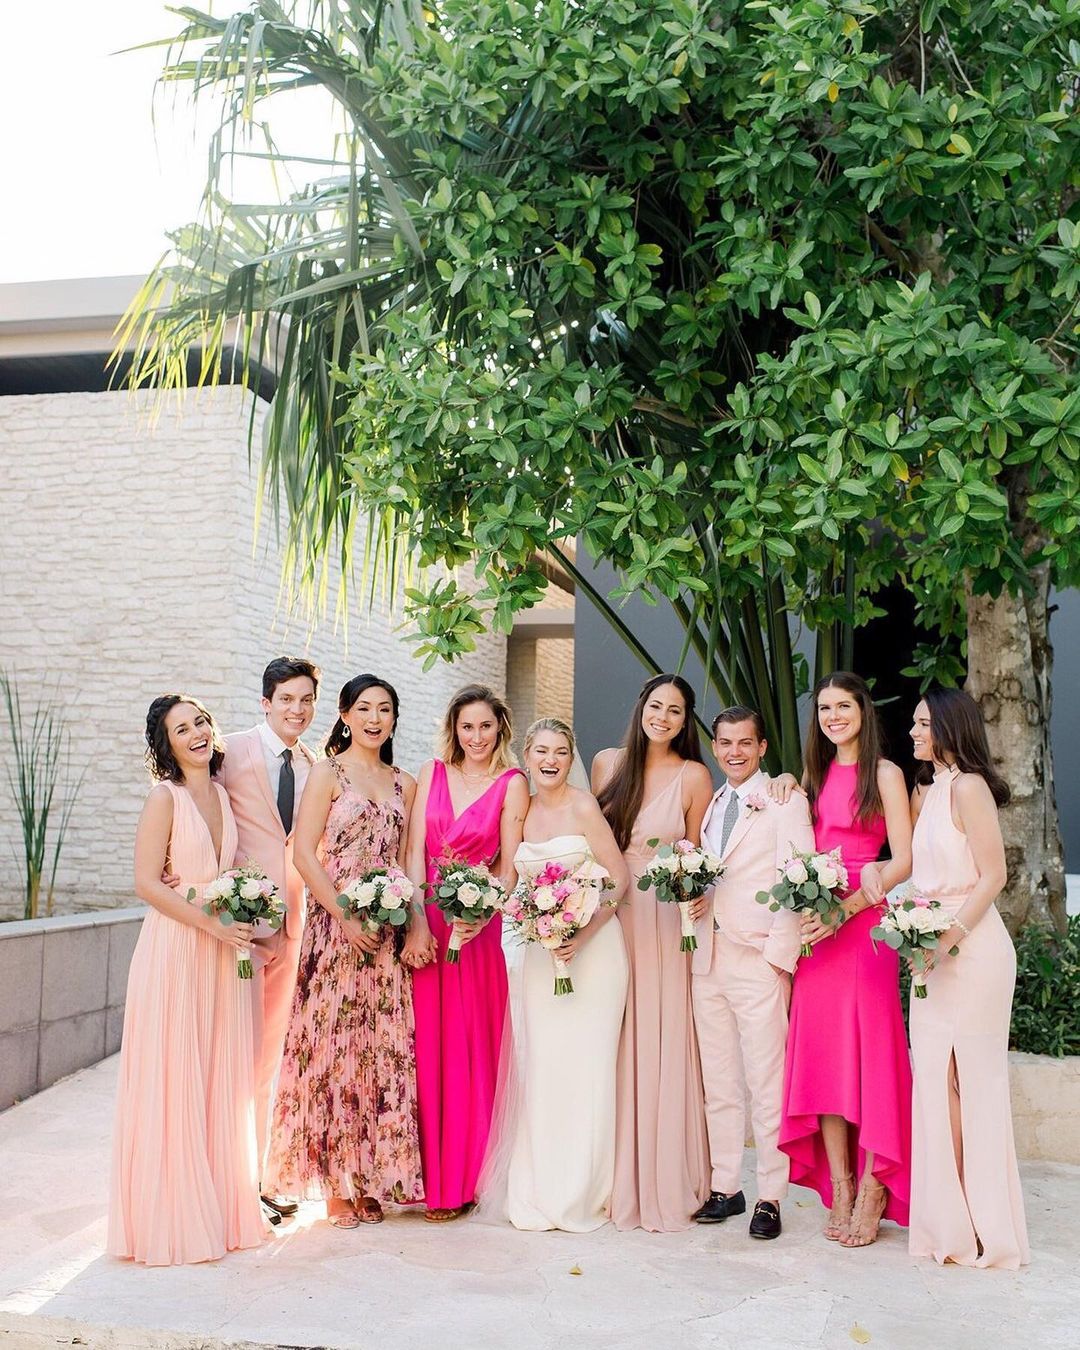 Azazie Bridesmaid Dress Color Comparisons – Which is Which? | Azazie Blog